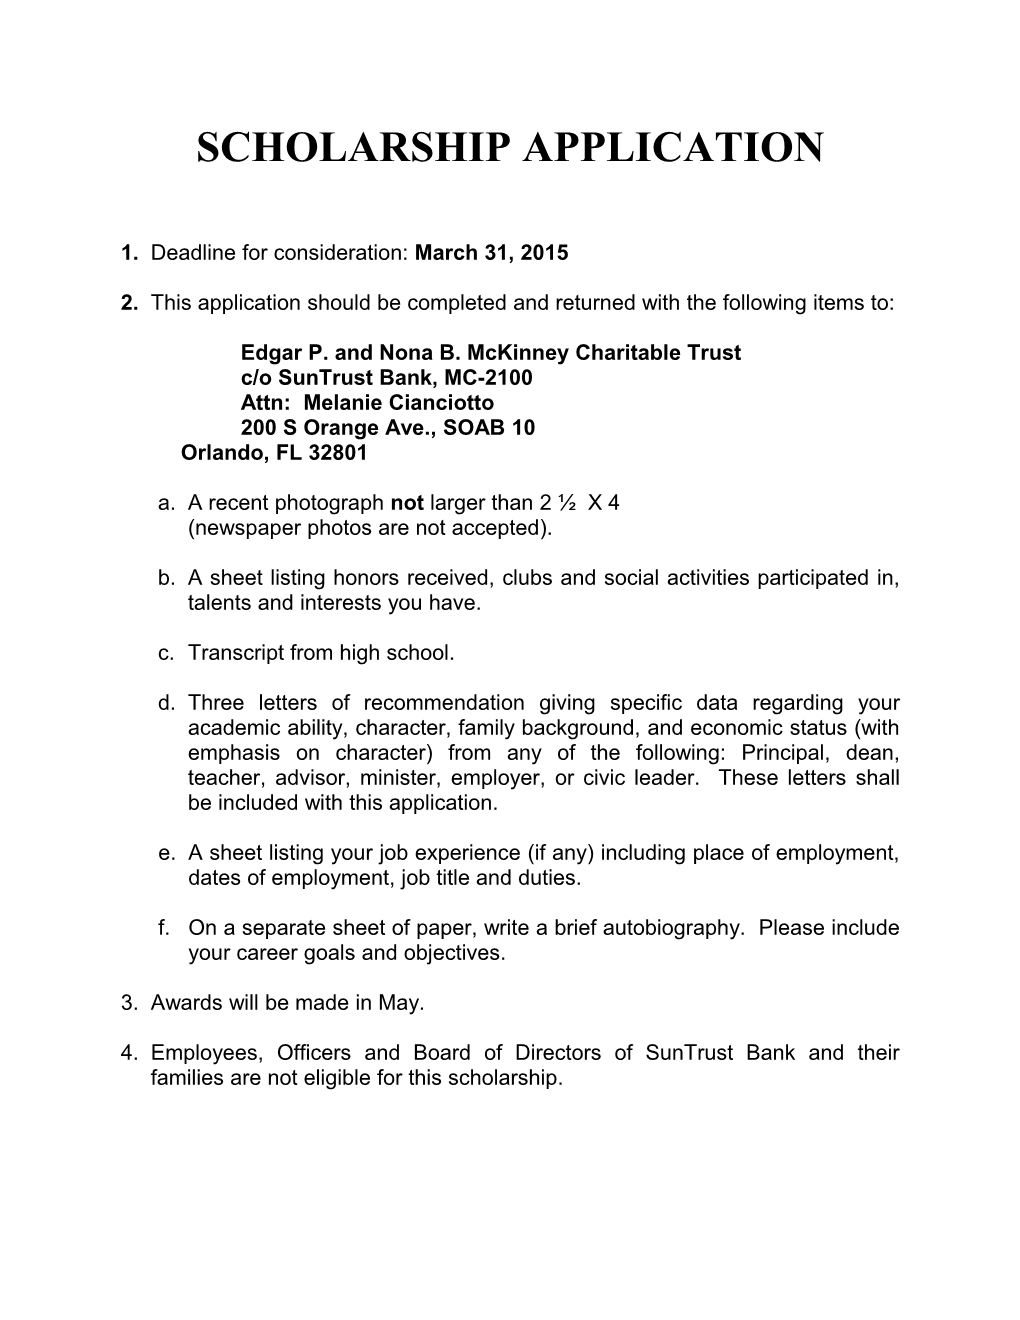 Scholarship Application s1